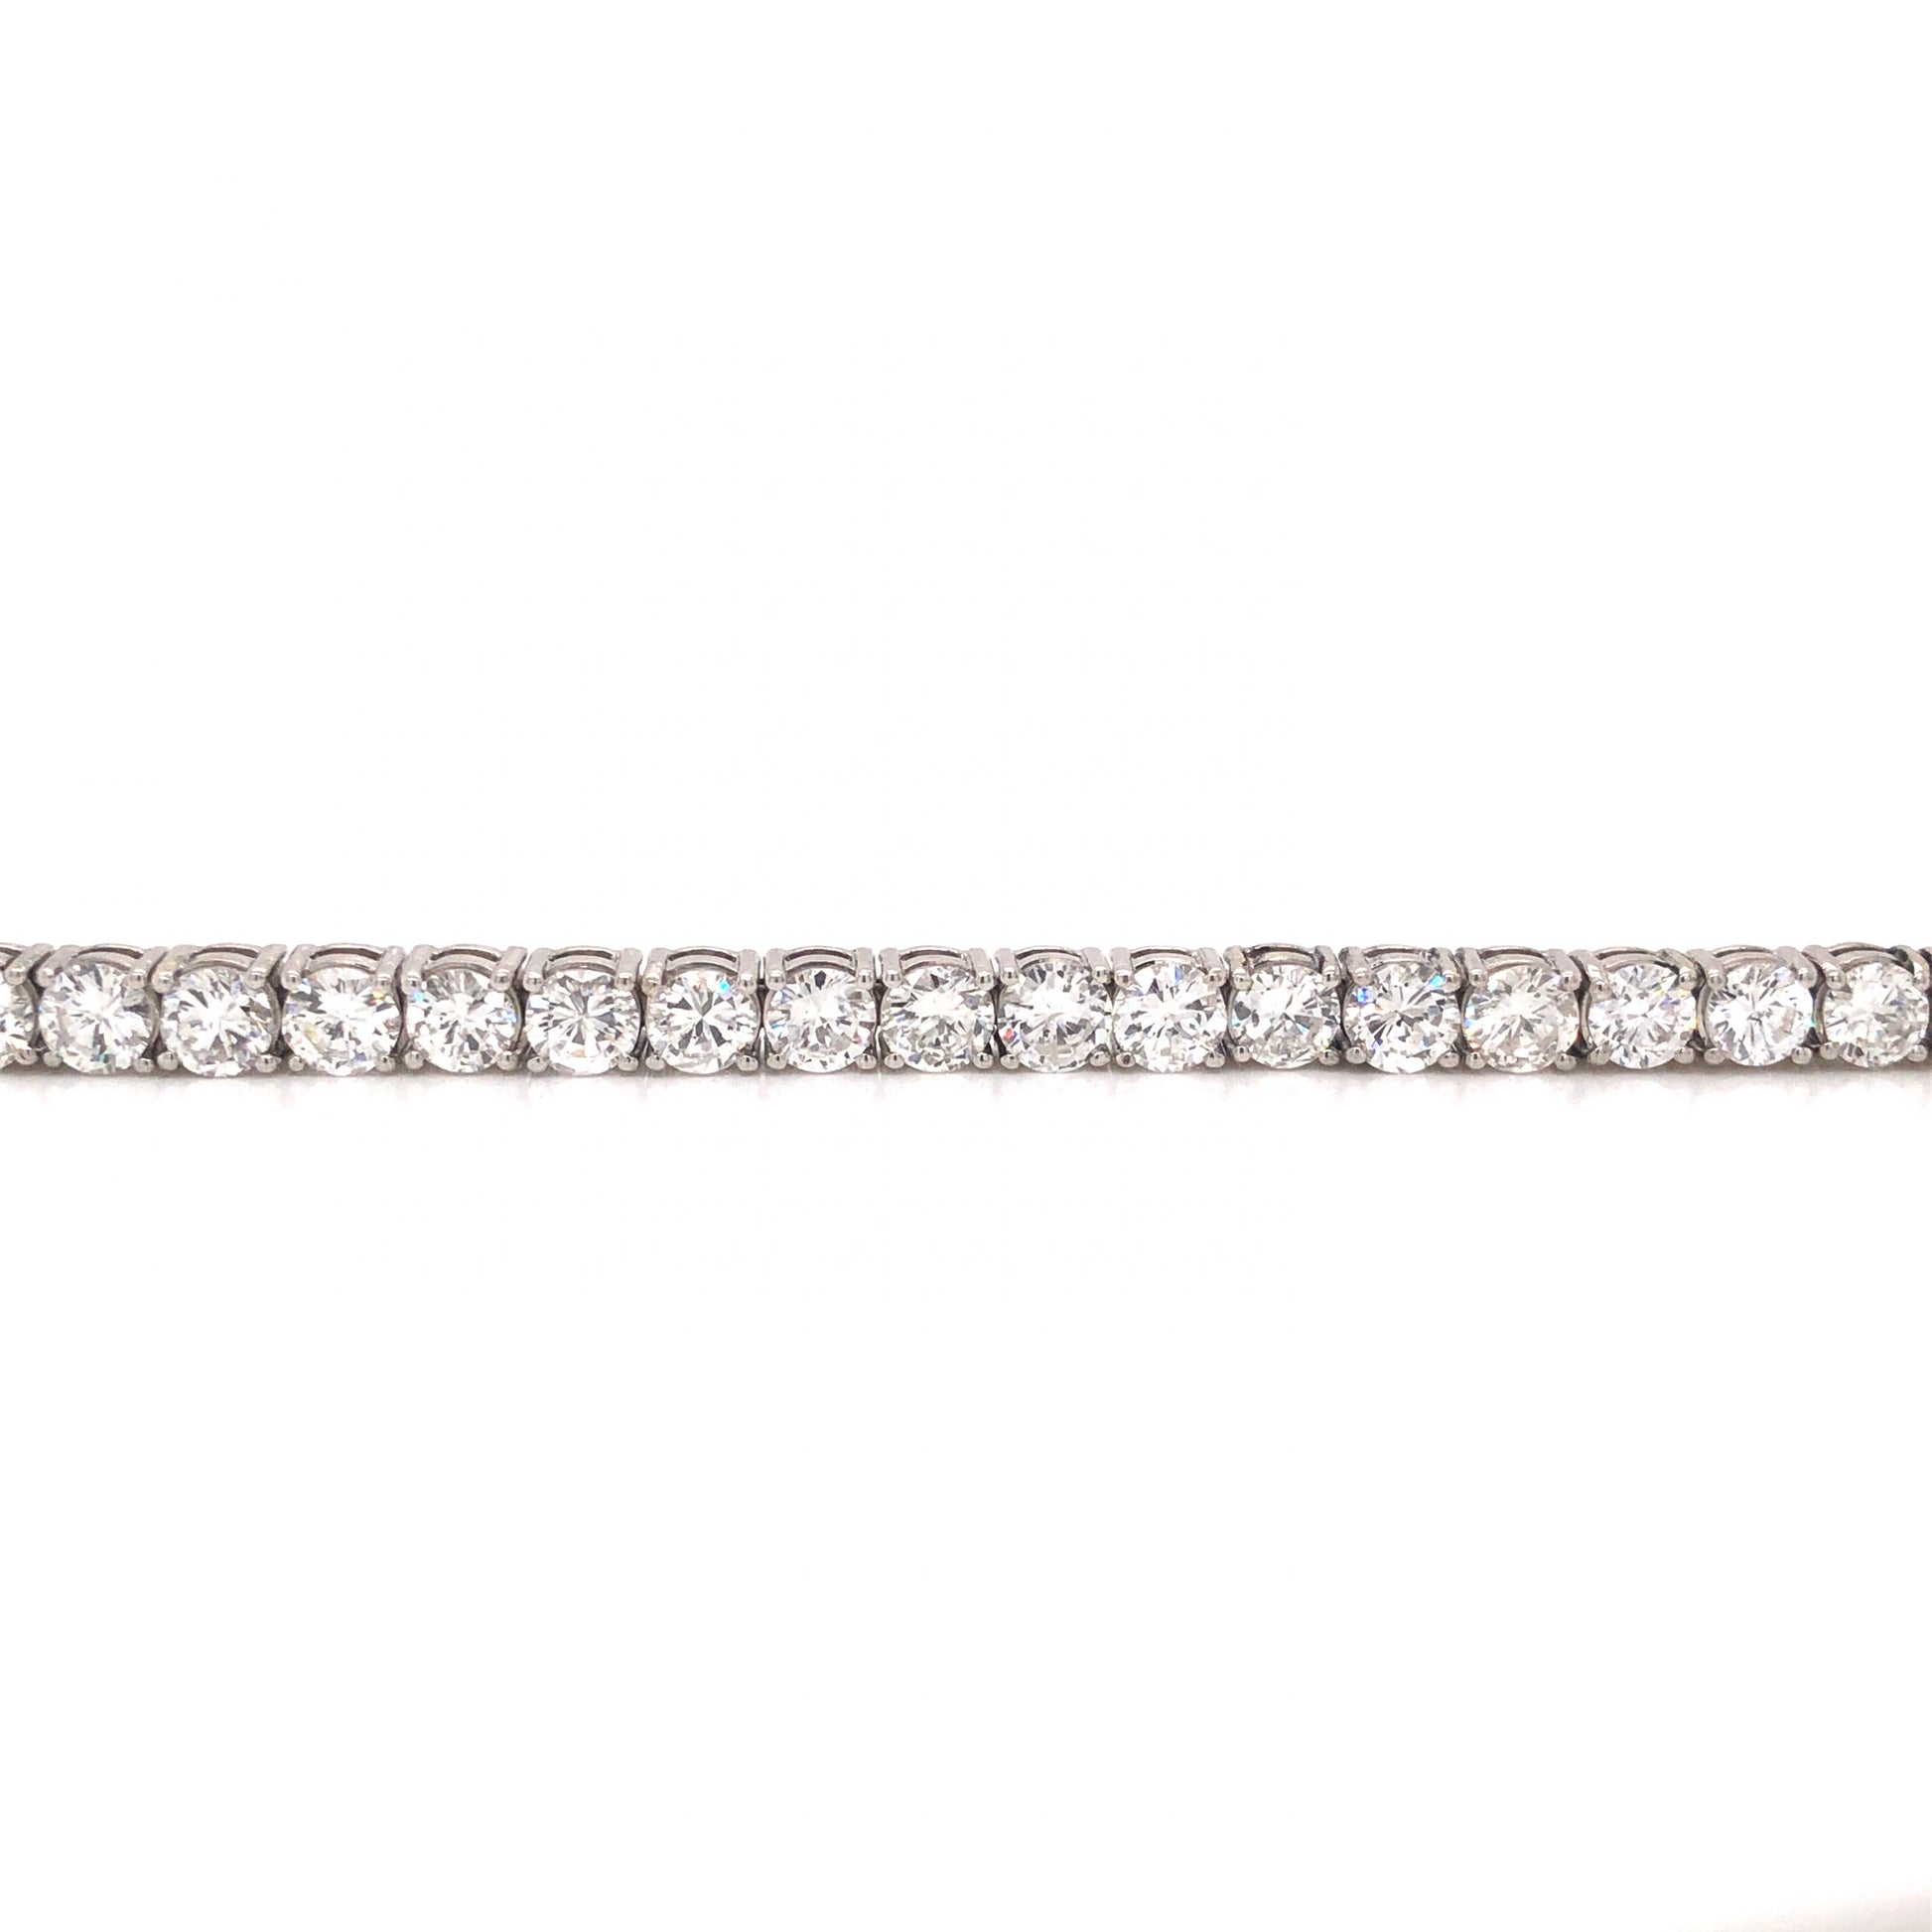 13 Carat Diamond Tennis Bracelet in 14k White GoldComposition: 14 Karat White GoldTotal Diamond Weight: 12.94 ctTotal Gram Weight: 19.6 g